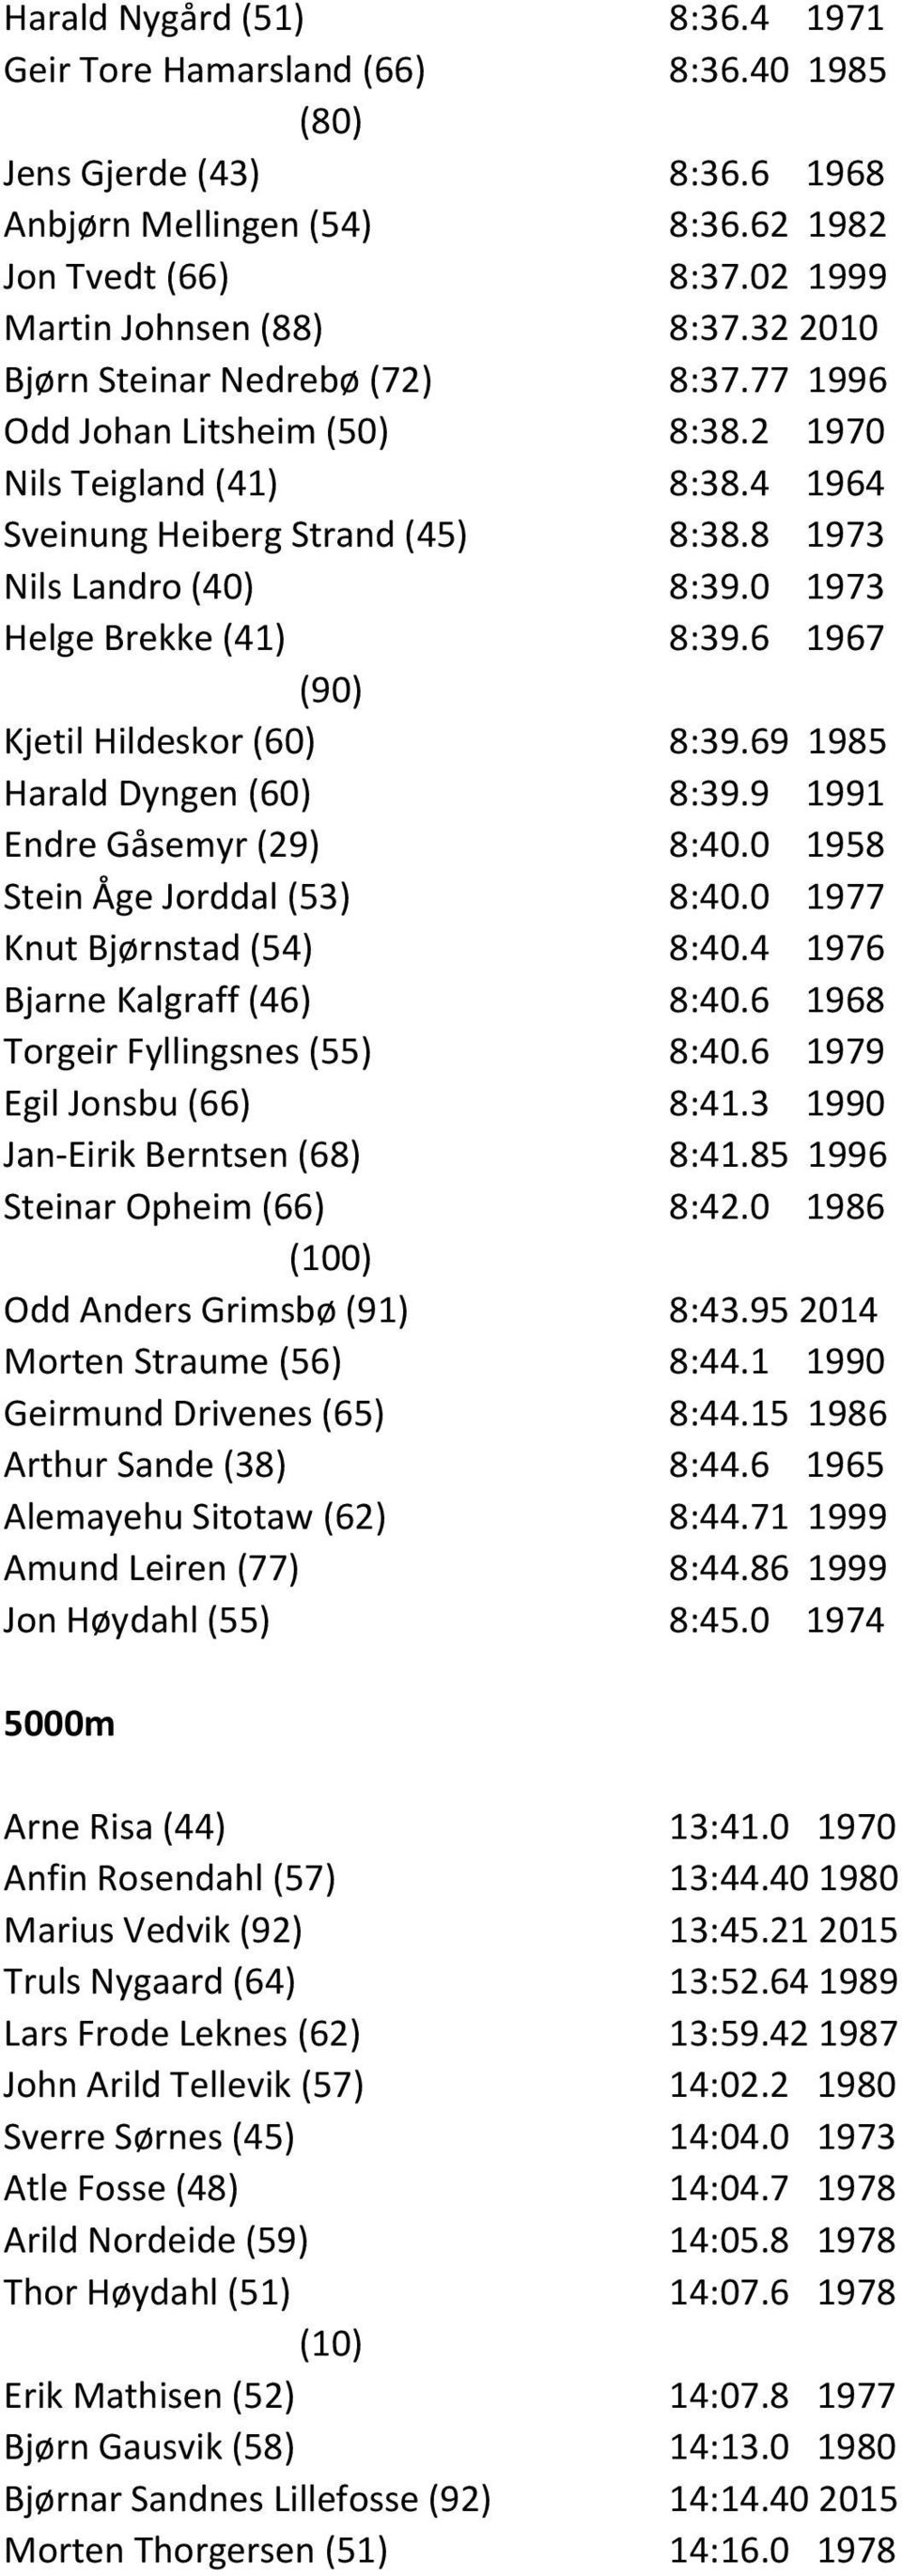 0 1973 Helge Brekke (41) 8:39.6 1967 (90) Kjetil Hildeskor (60) 8:39.69 1985 Harald Dyngen (60) 8:39.9 1991 Endre Gåsemyr (29) 8:40.0 1958 Stein Åge Jorddal (53) 8:40.0 1977 Knut Bjørnstad (54) 8:40.